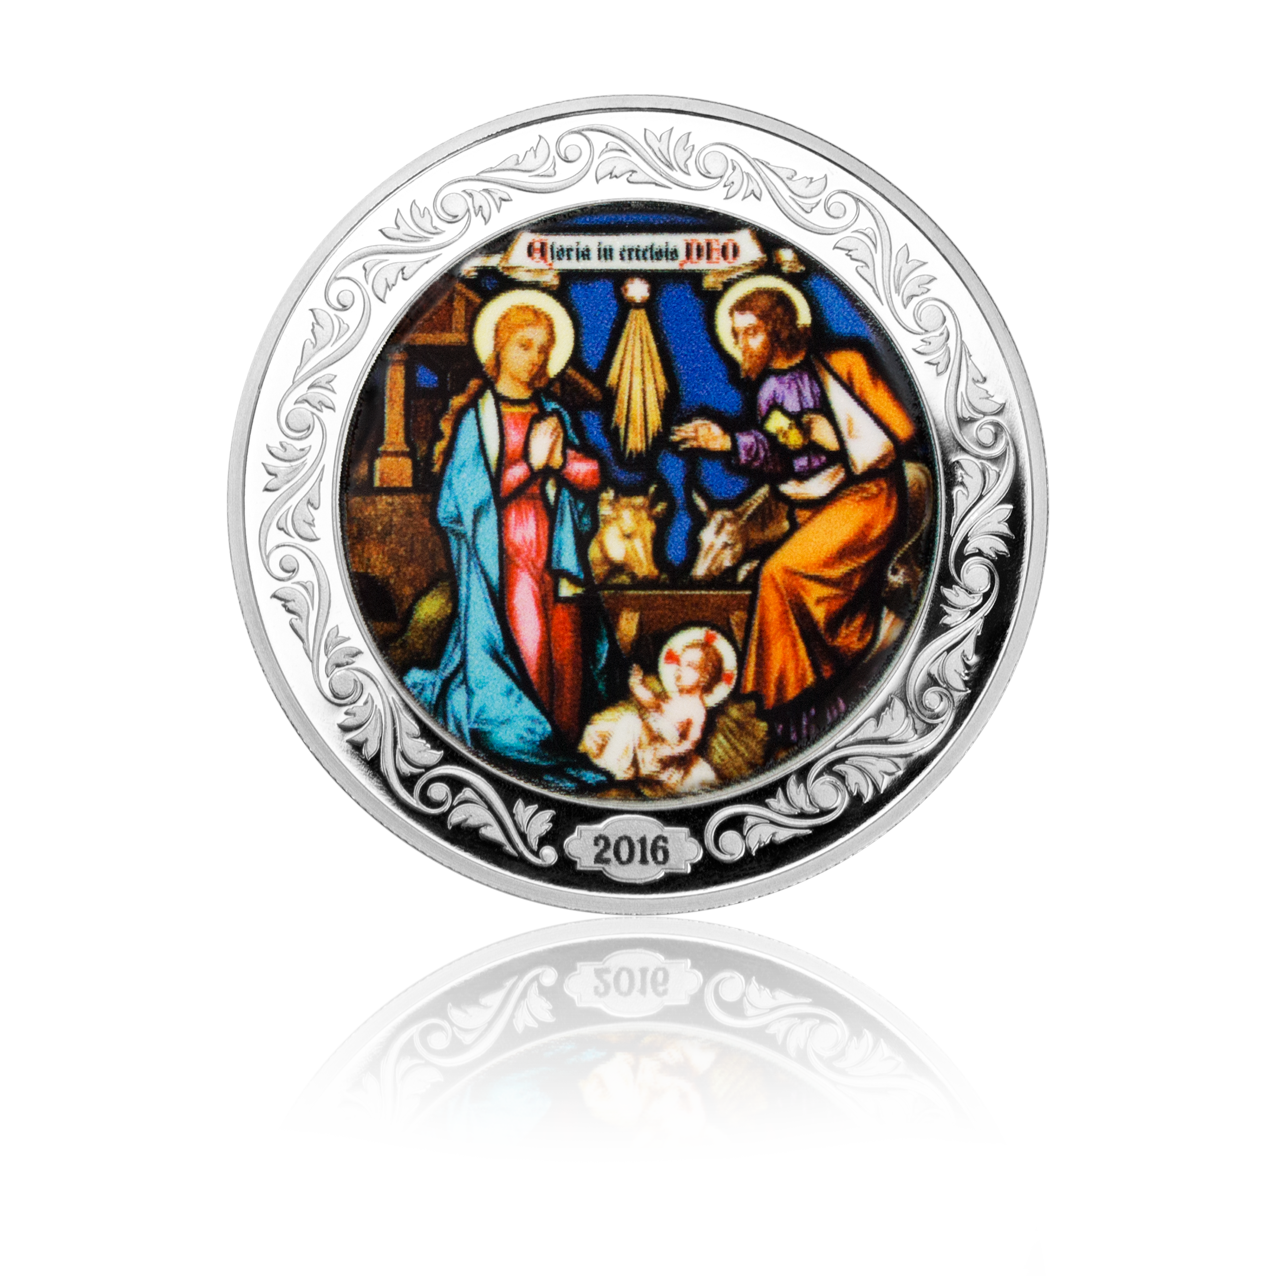 Christian nativity medal Schloss Güldengossa 2016 - 1/2 oz silver with coloration